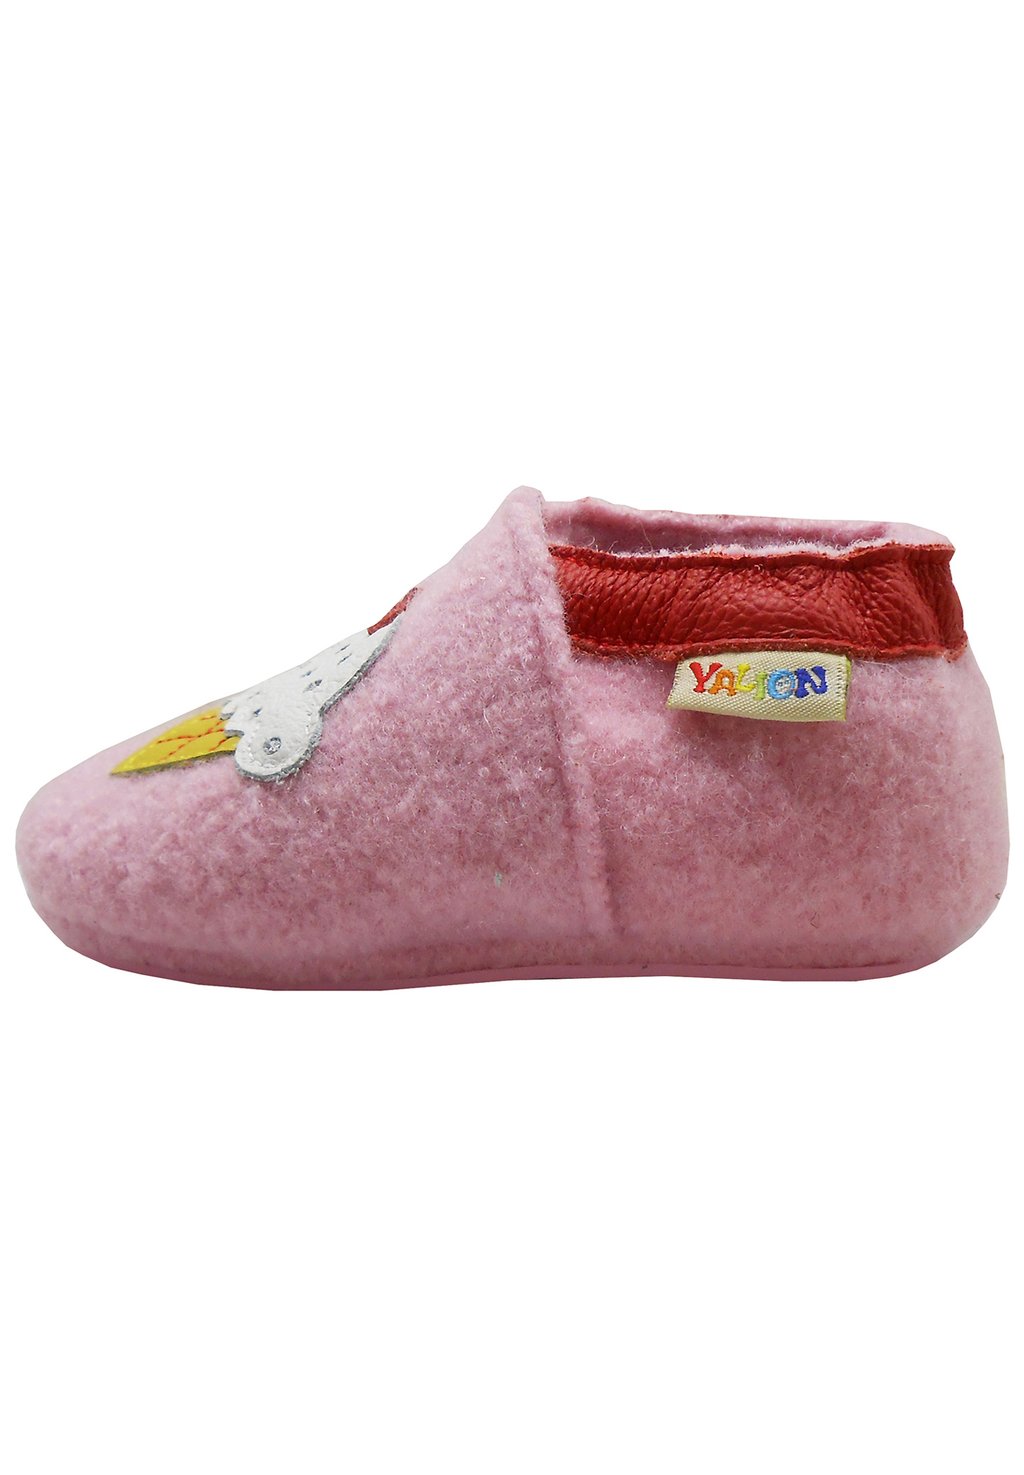 Туфли для ползания WEICHE KRABBEL Yalion, цвет rosa обувь для ползания yalion krabbel elefant цвет elefant grau